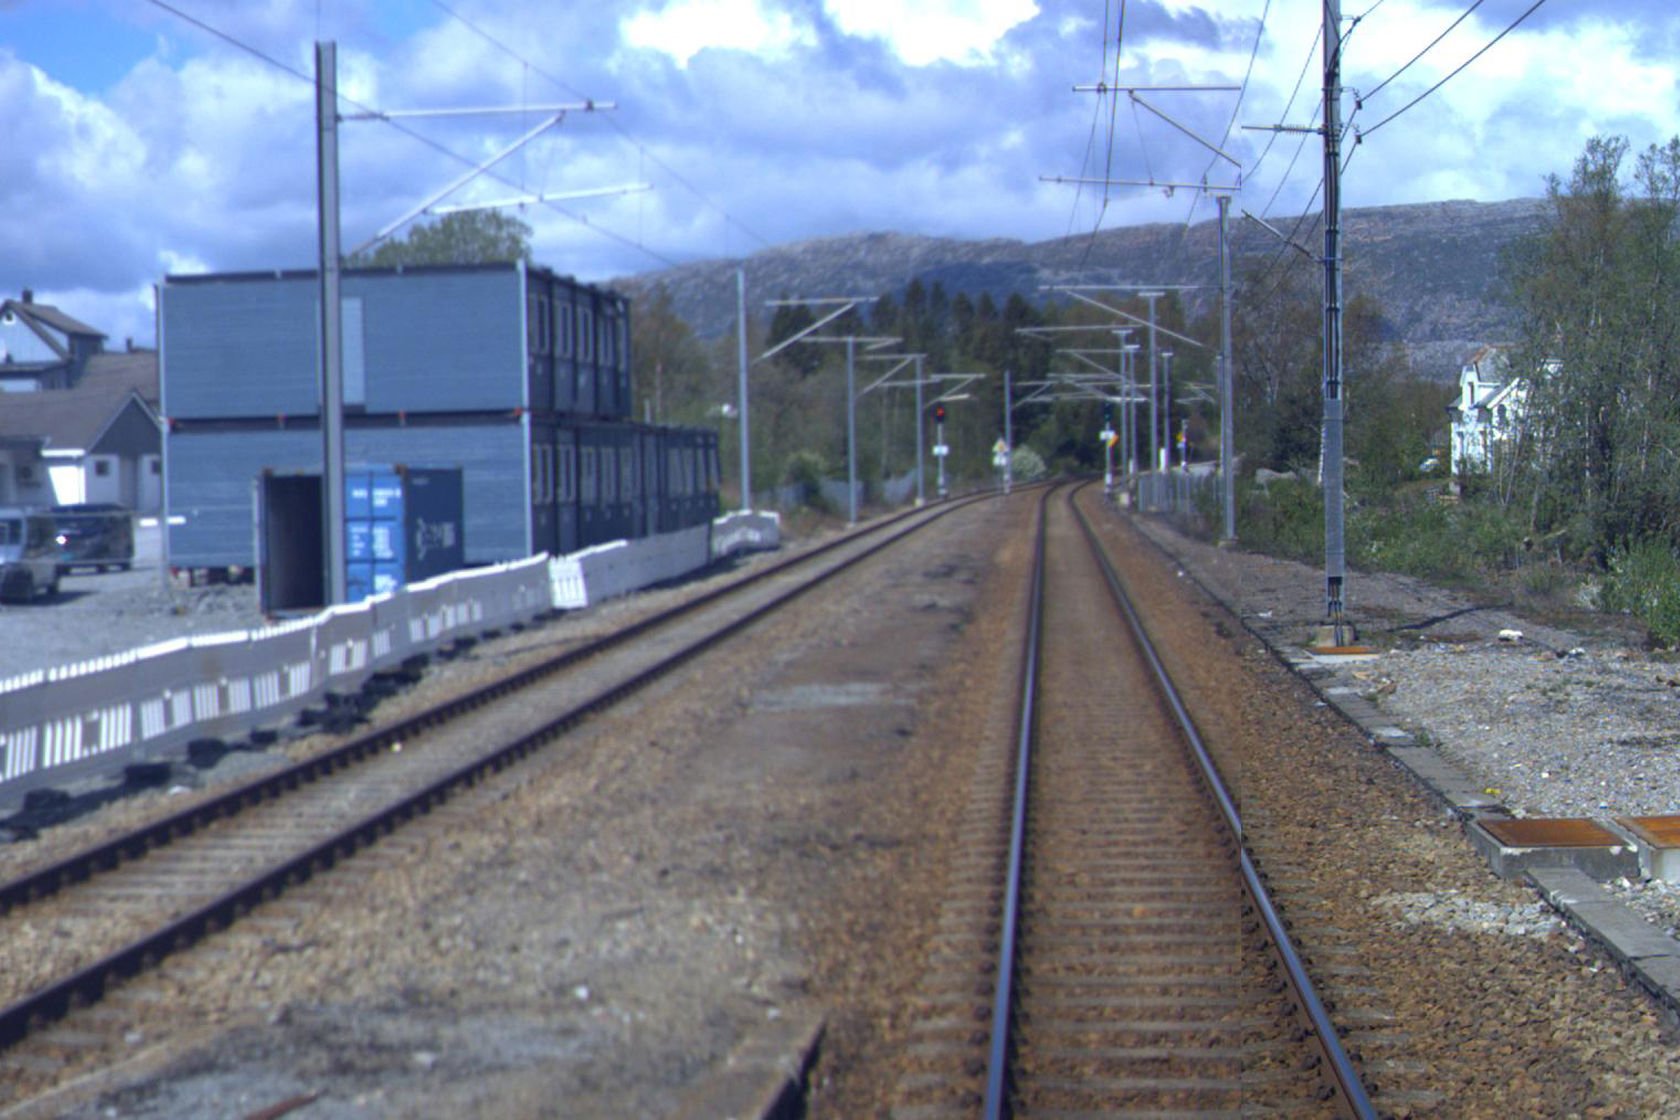 Tracks at Ualand station